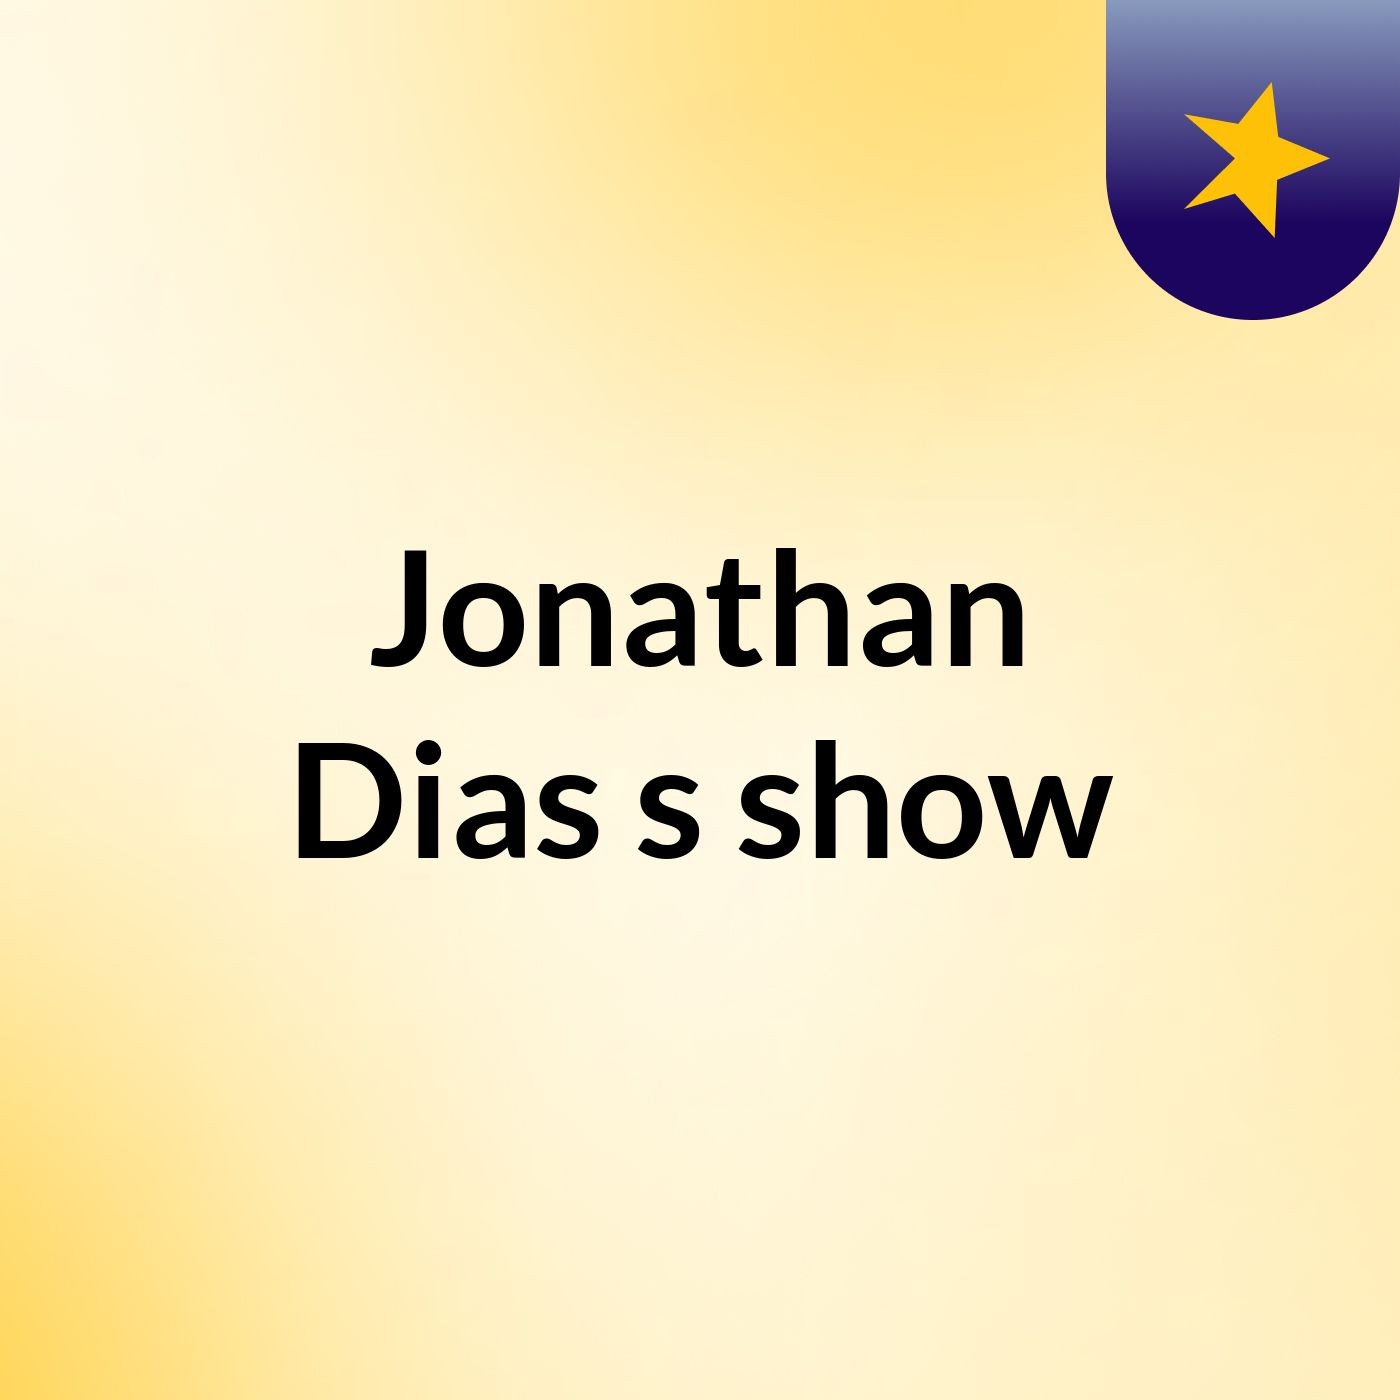 Jonathan Dias's show